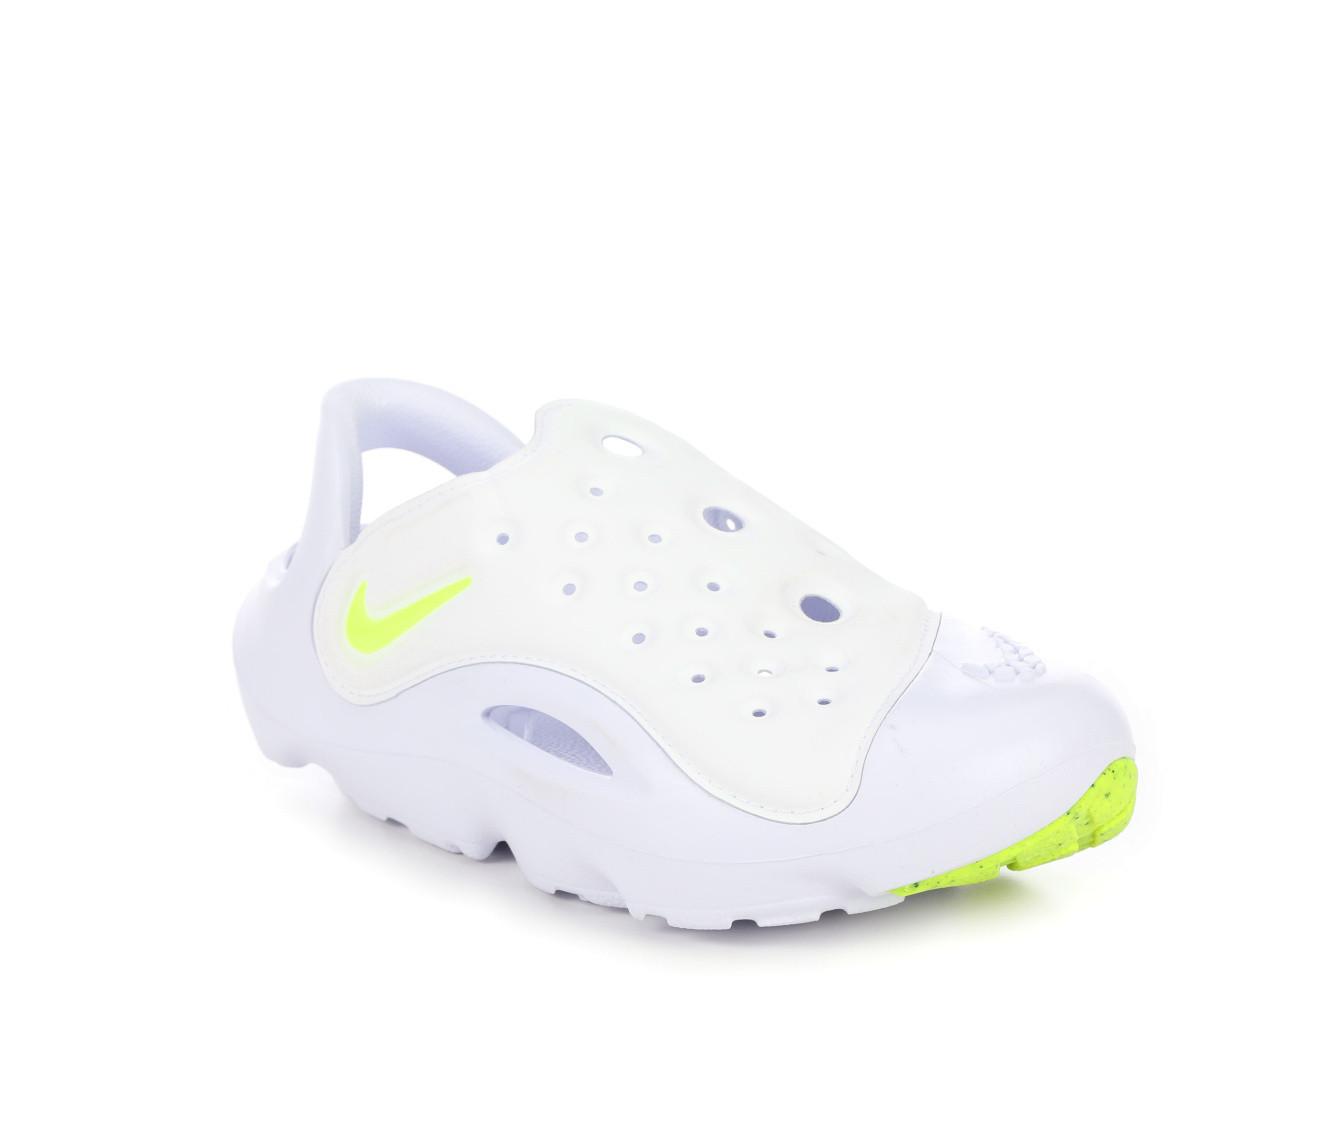 Kids' Nike Toddler & Little Kid Sol Sandals